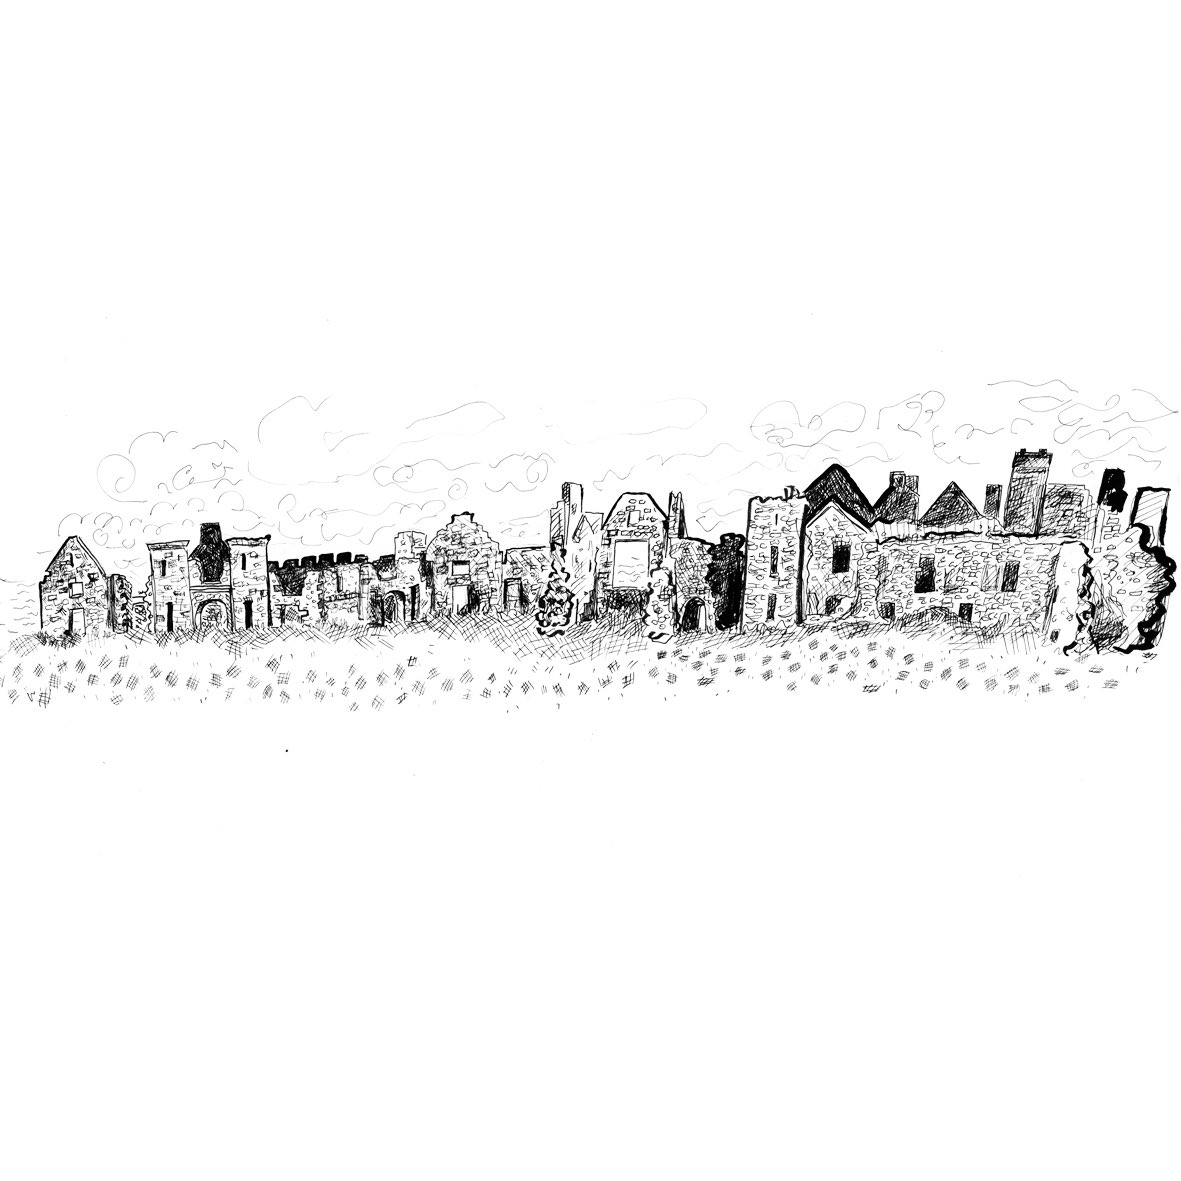 I’ve been #drawing places around Aberdeen #slainscastle #crudenbay #aberdeen #aberdeenshire #visitscotland #peterhead #drawdrawdraw #sketchbook #trave #scottish #castle #scottishcastle #scottishcastes #visitaberdeenshire @VisitScotland @visitabdn